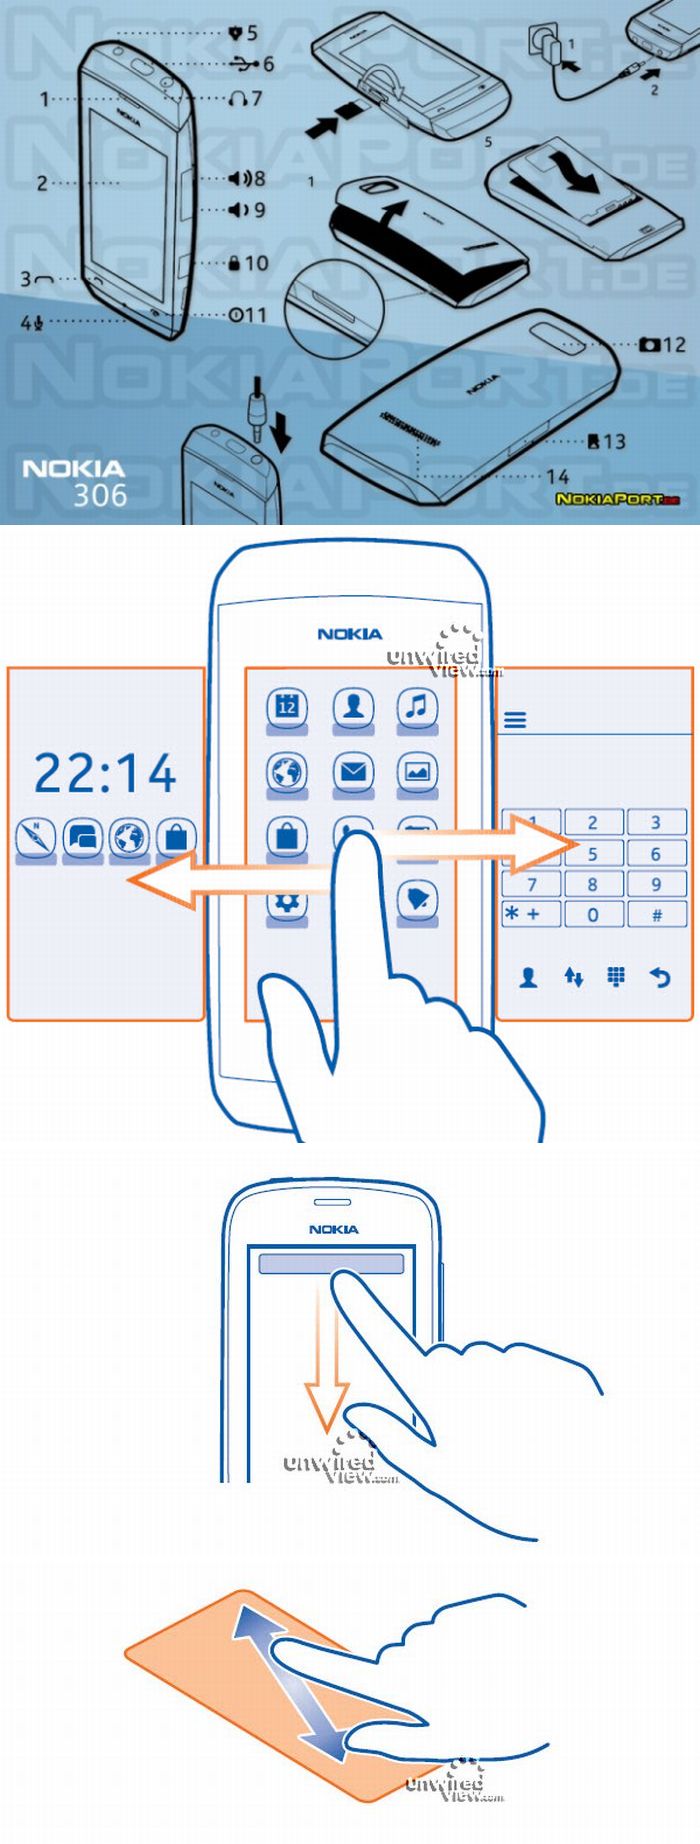 Nokia Asha 306 - az elsõ full touch S40-es mobil